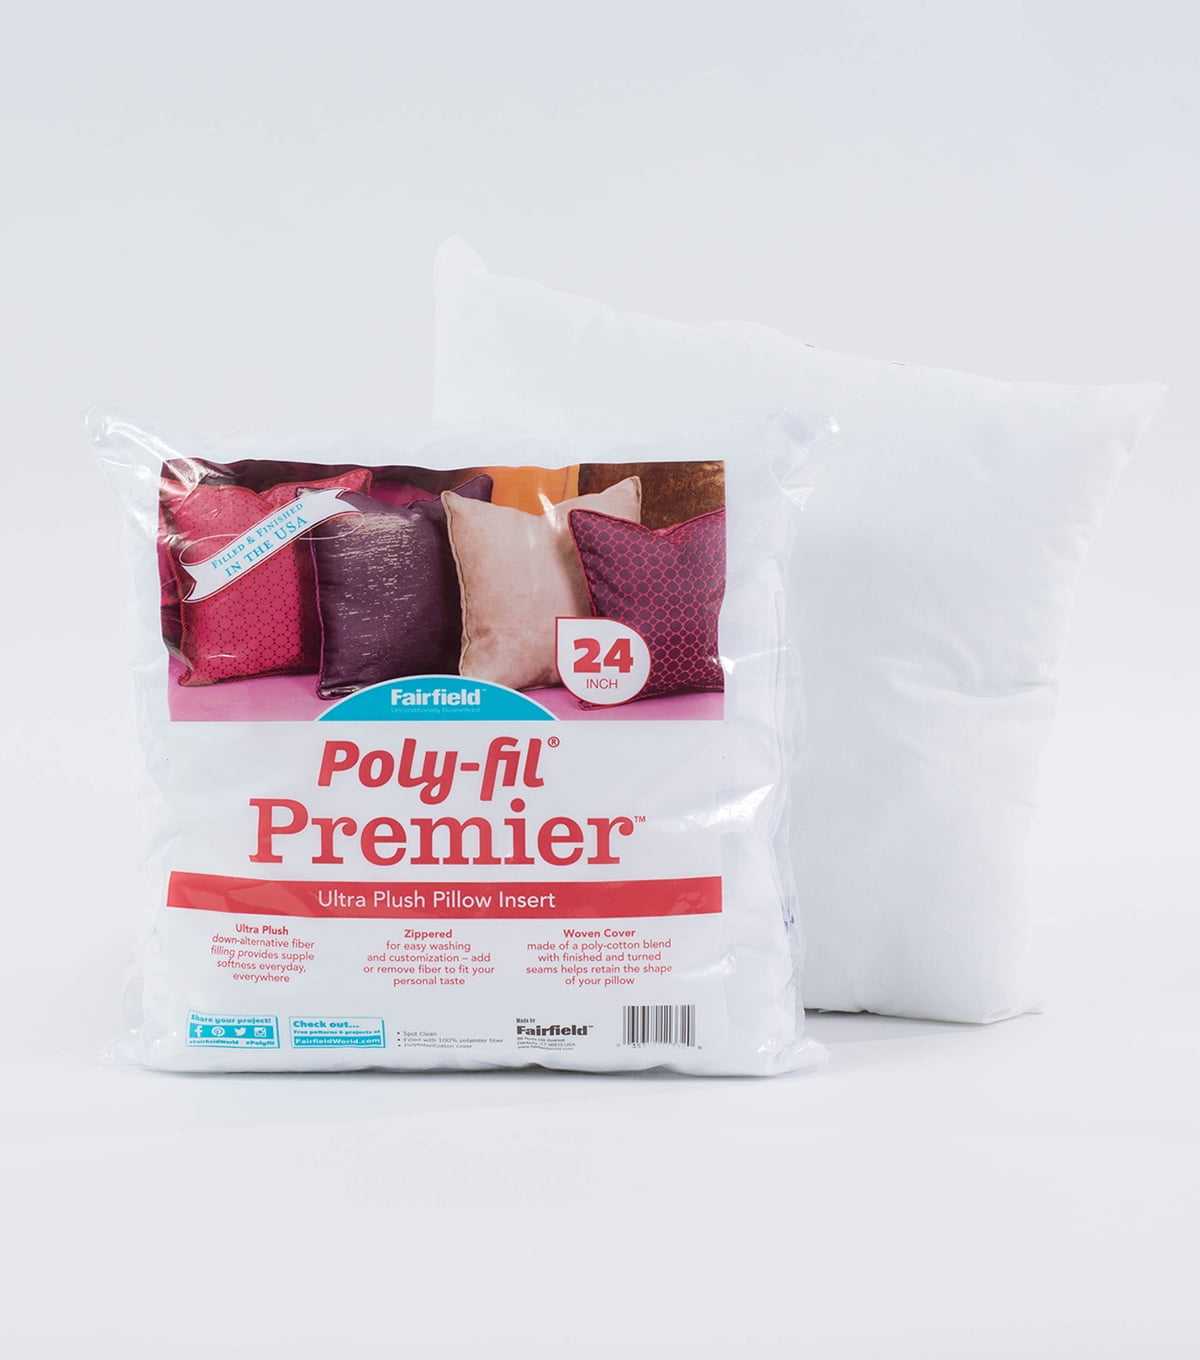 Unikome Decorative Lumbar Pillow Inserts 12 x 20 (Pack of 2, White), F